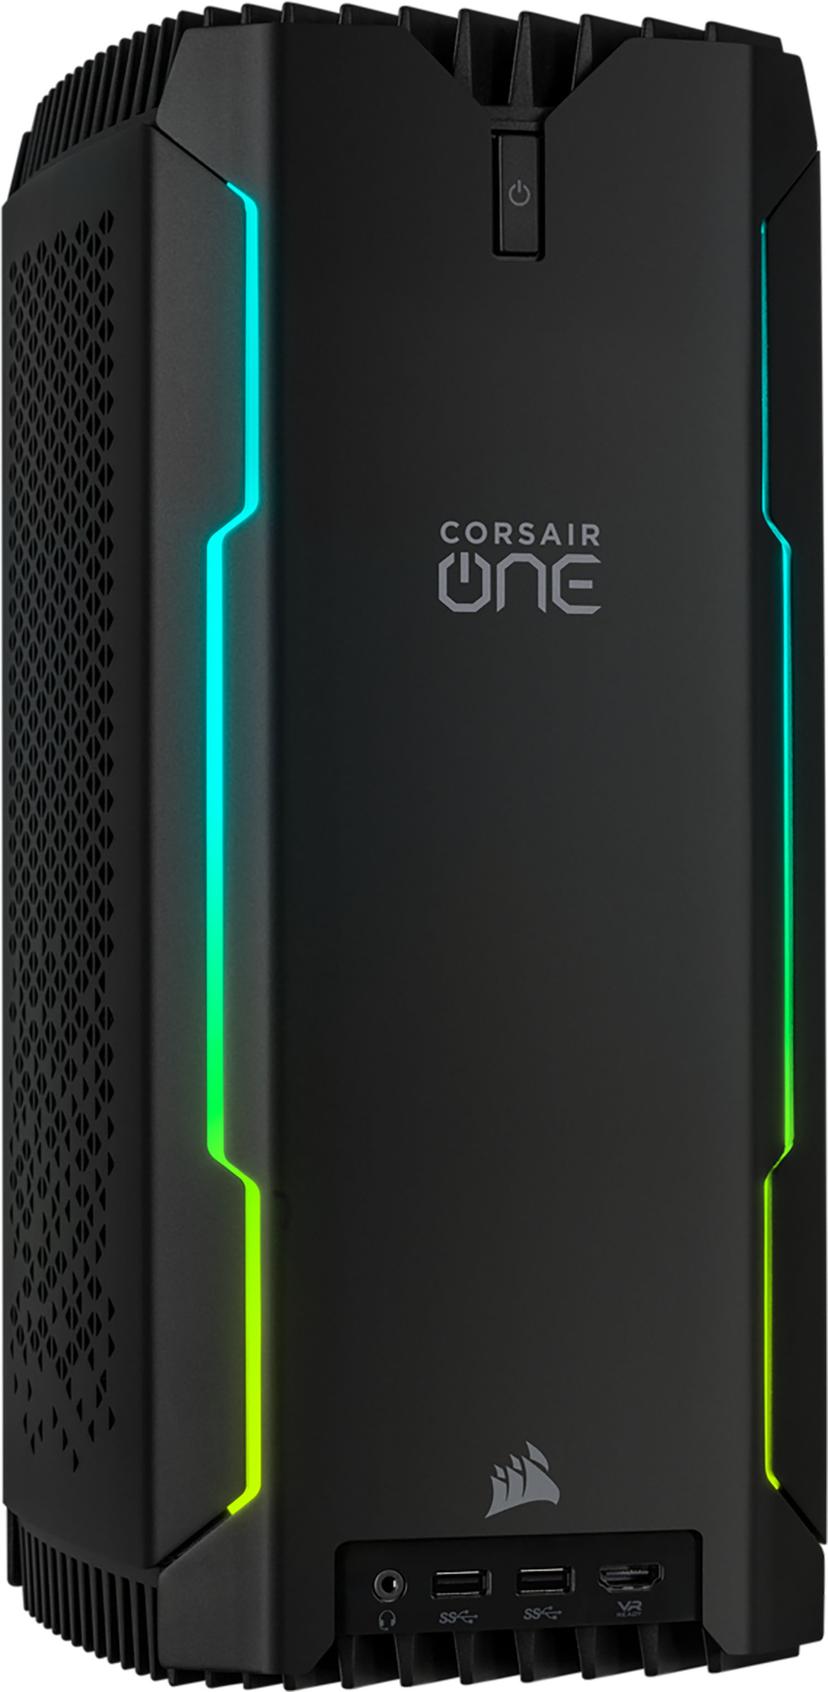 Corsair One Core i9 32GB 480GB SSD (CS-9020003-EU) | Dustin.dk